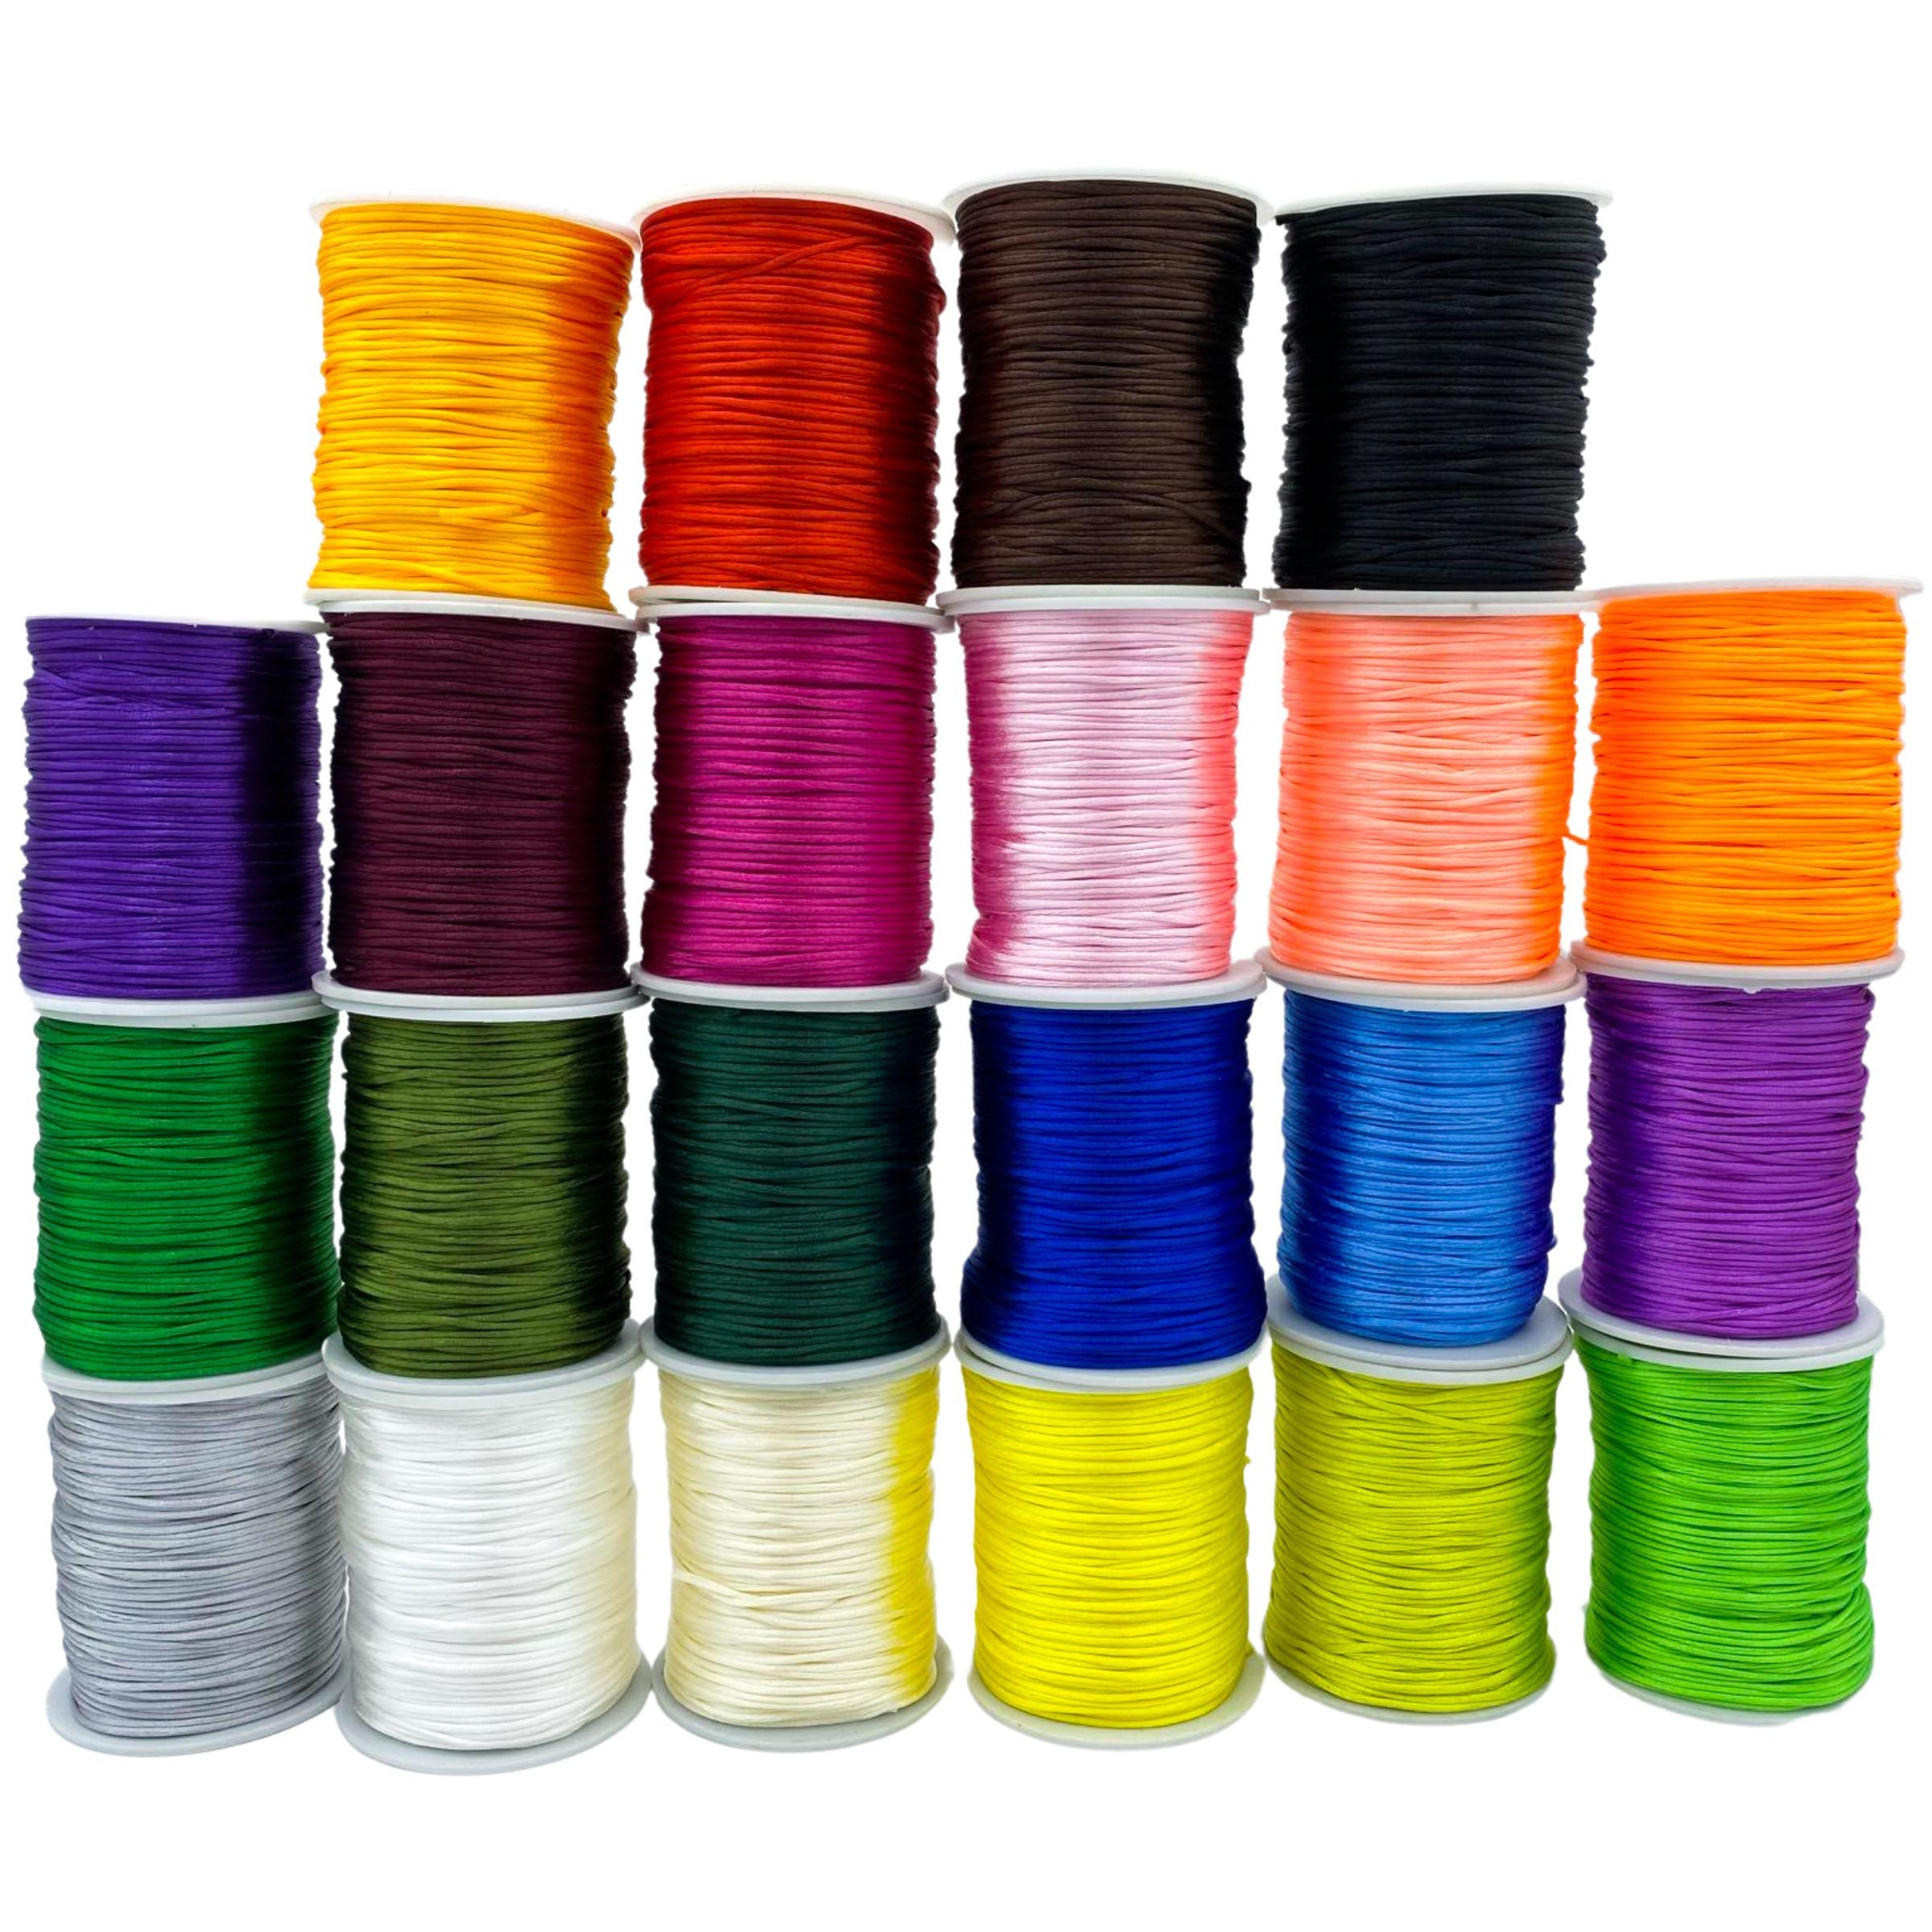 Ben Collection 2mm X 100 Yard Rattail Satin Nylon Trim Cord Chinese Knot